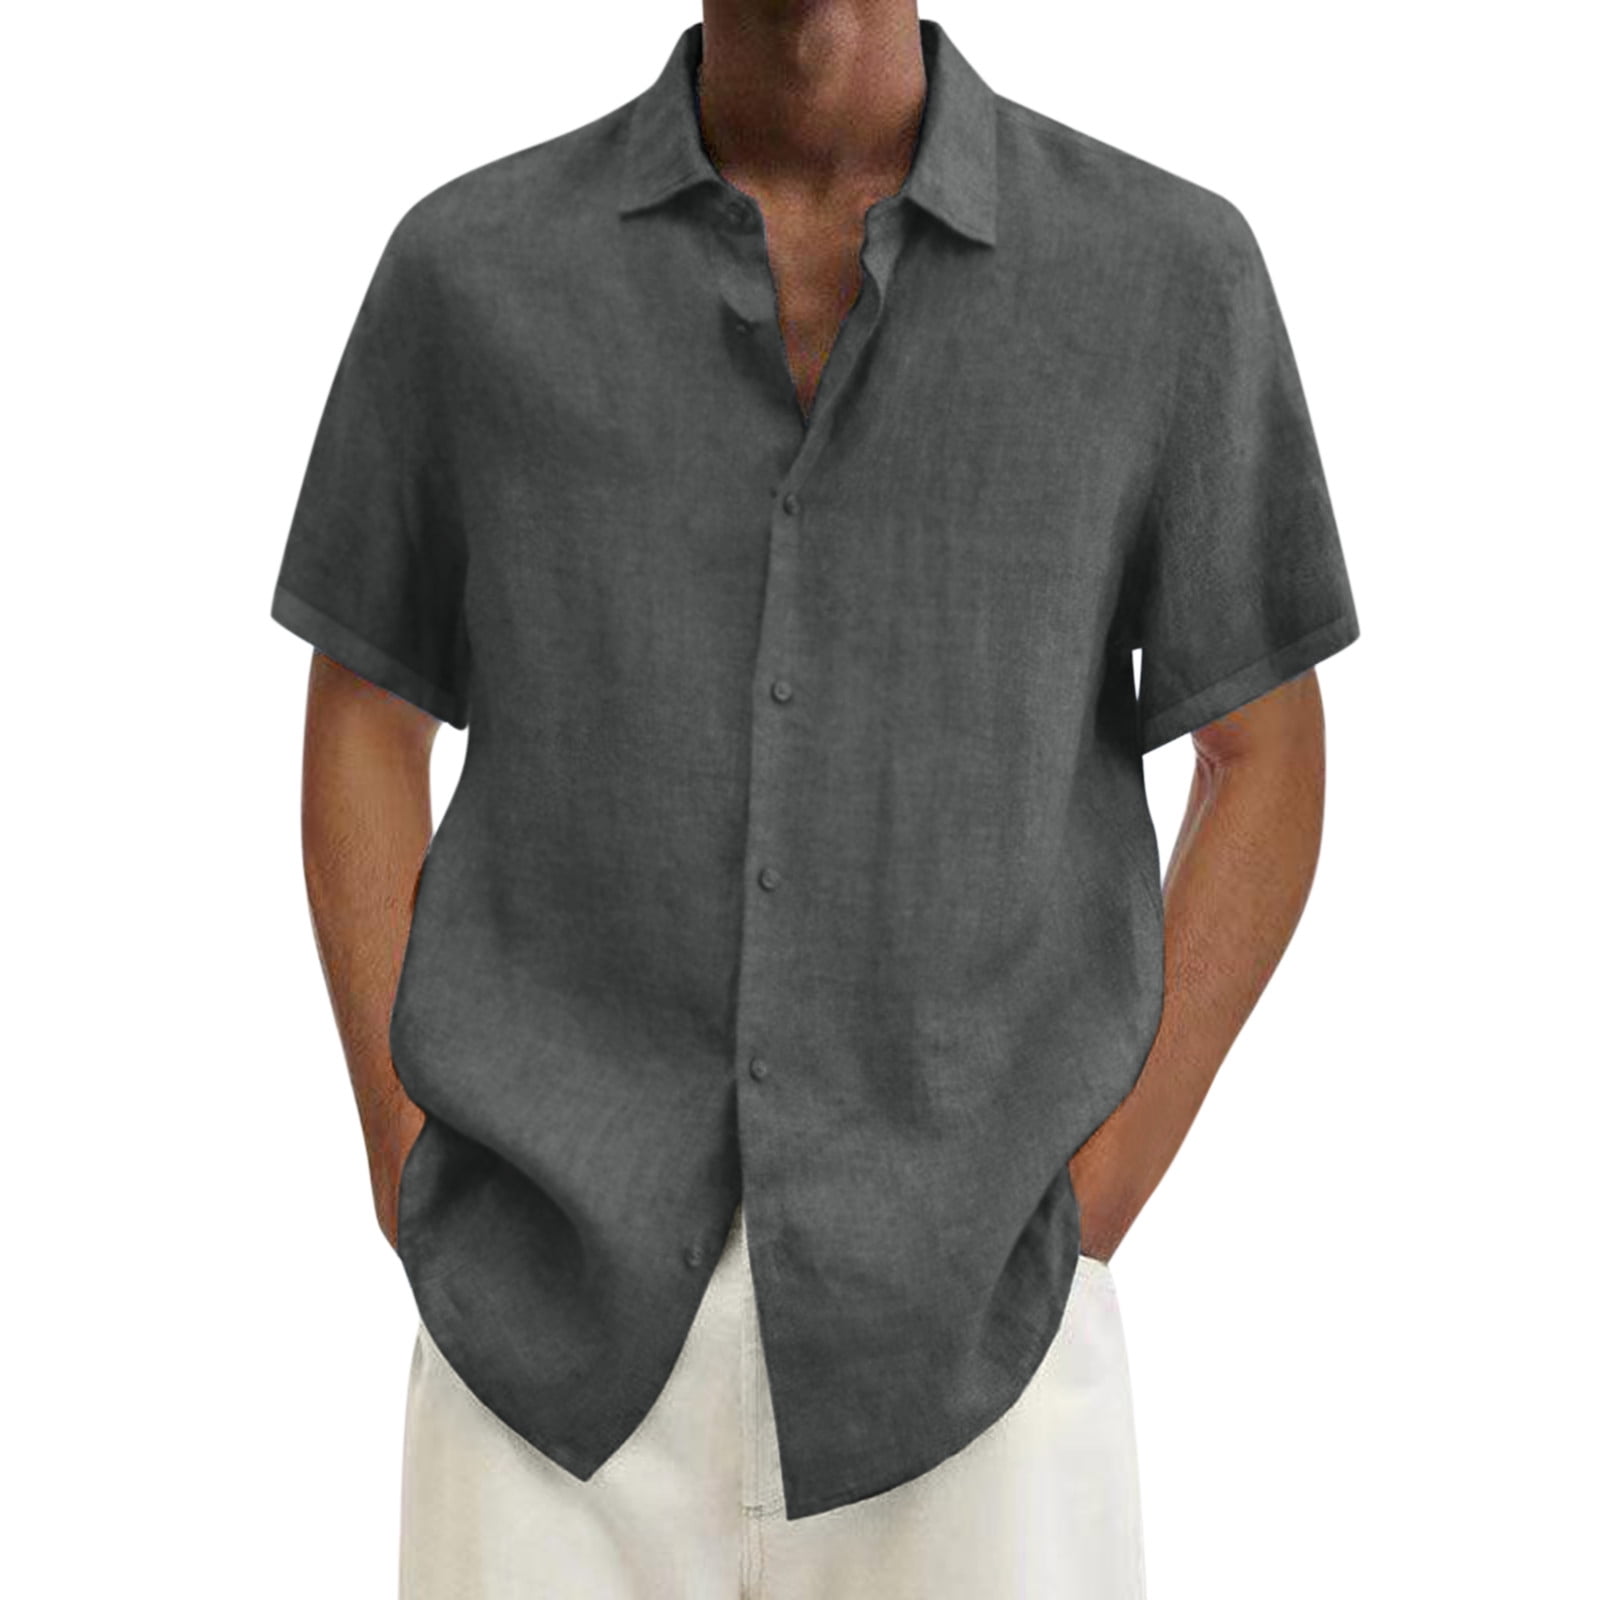 Labakihah shirt for men Male Summer Hawaii Solid Shirt Short Sleeve ...